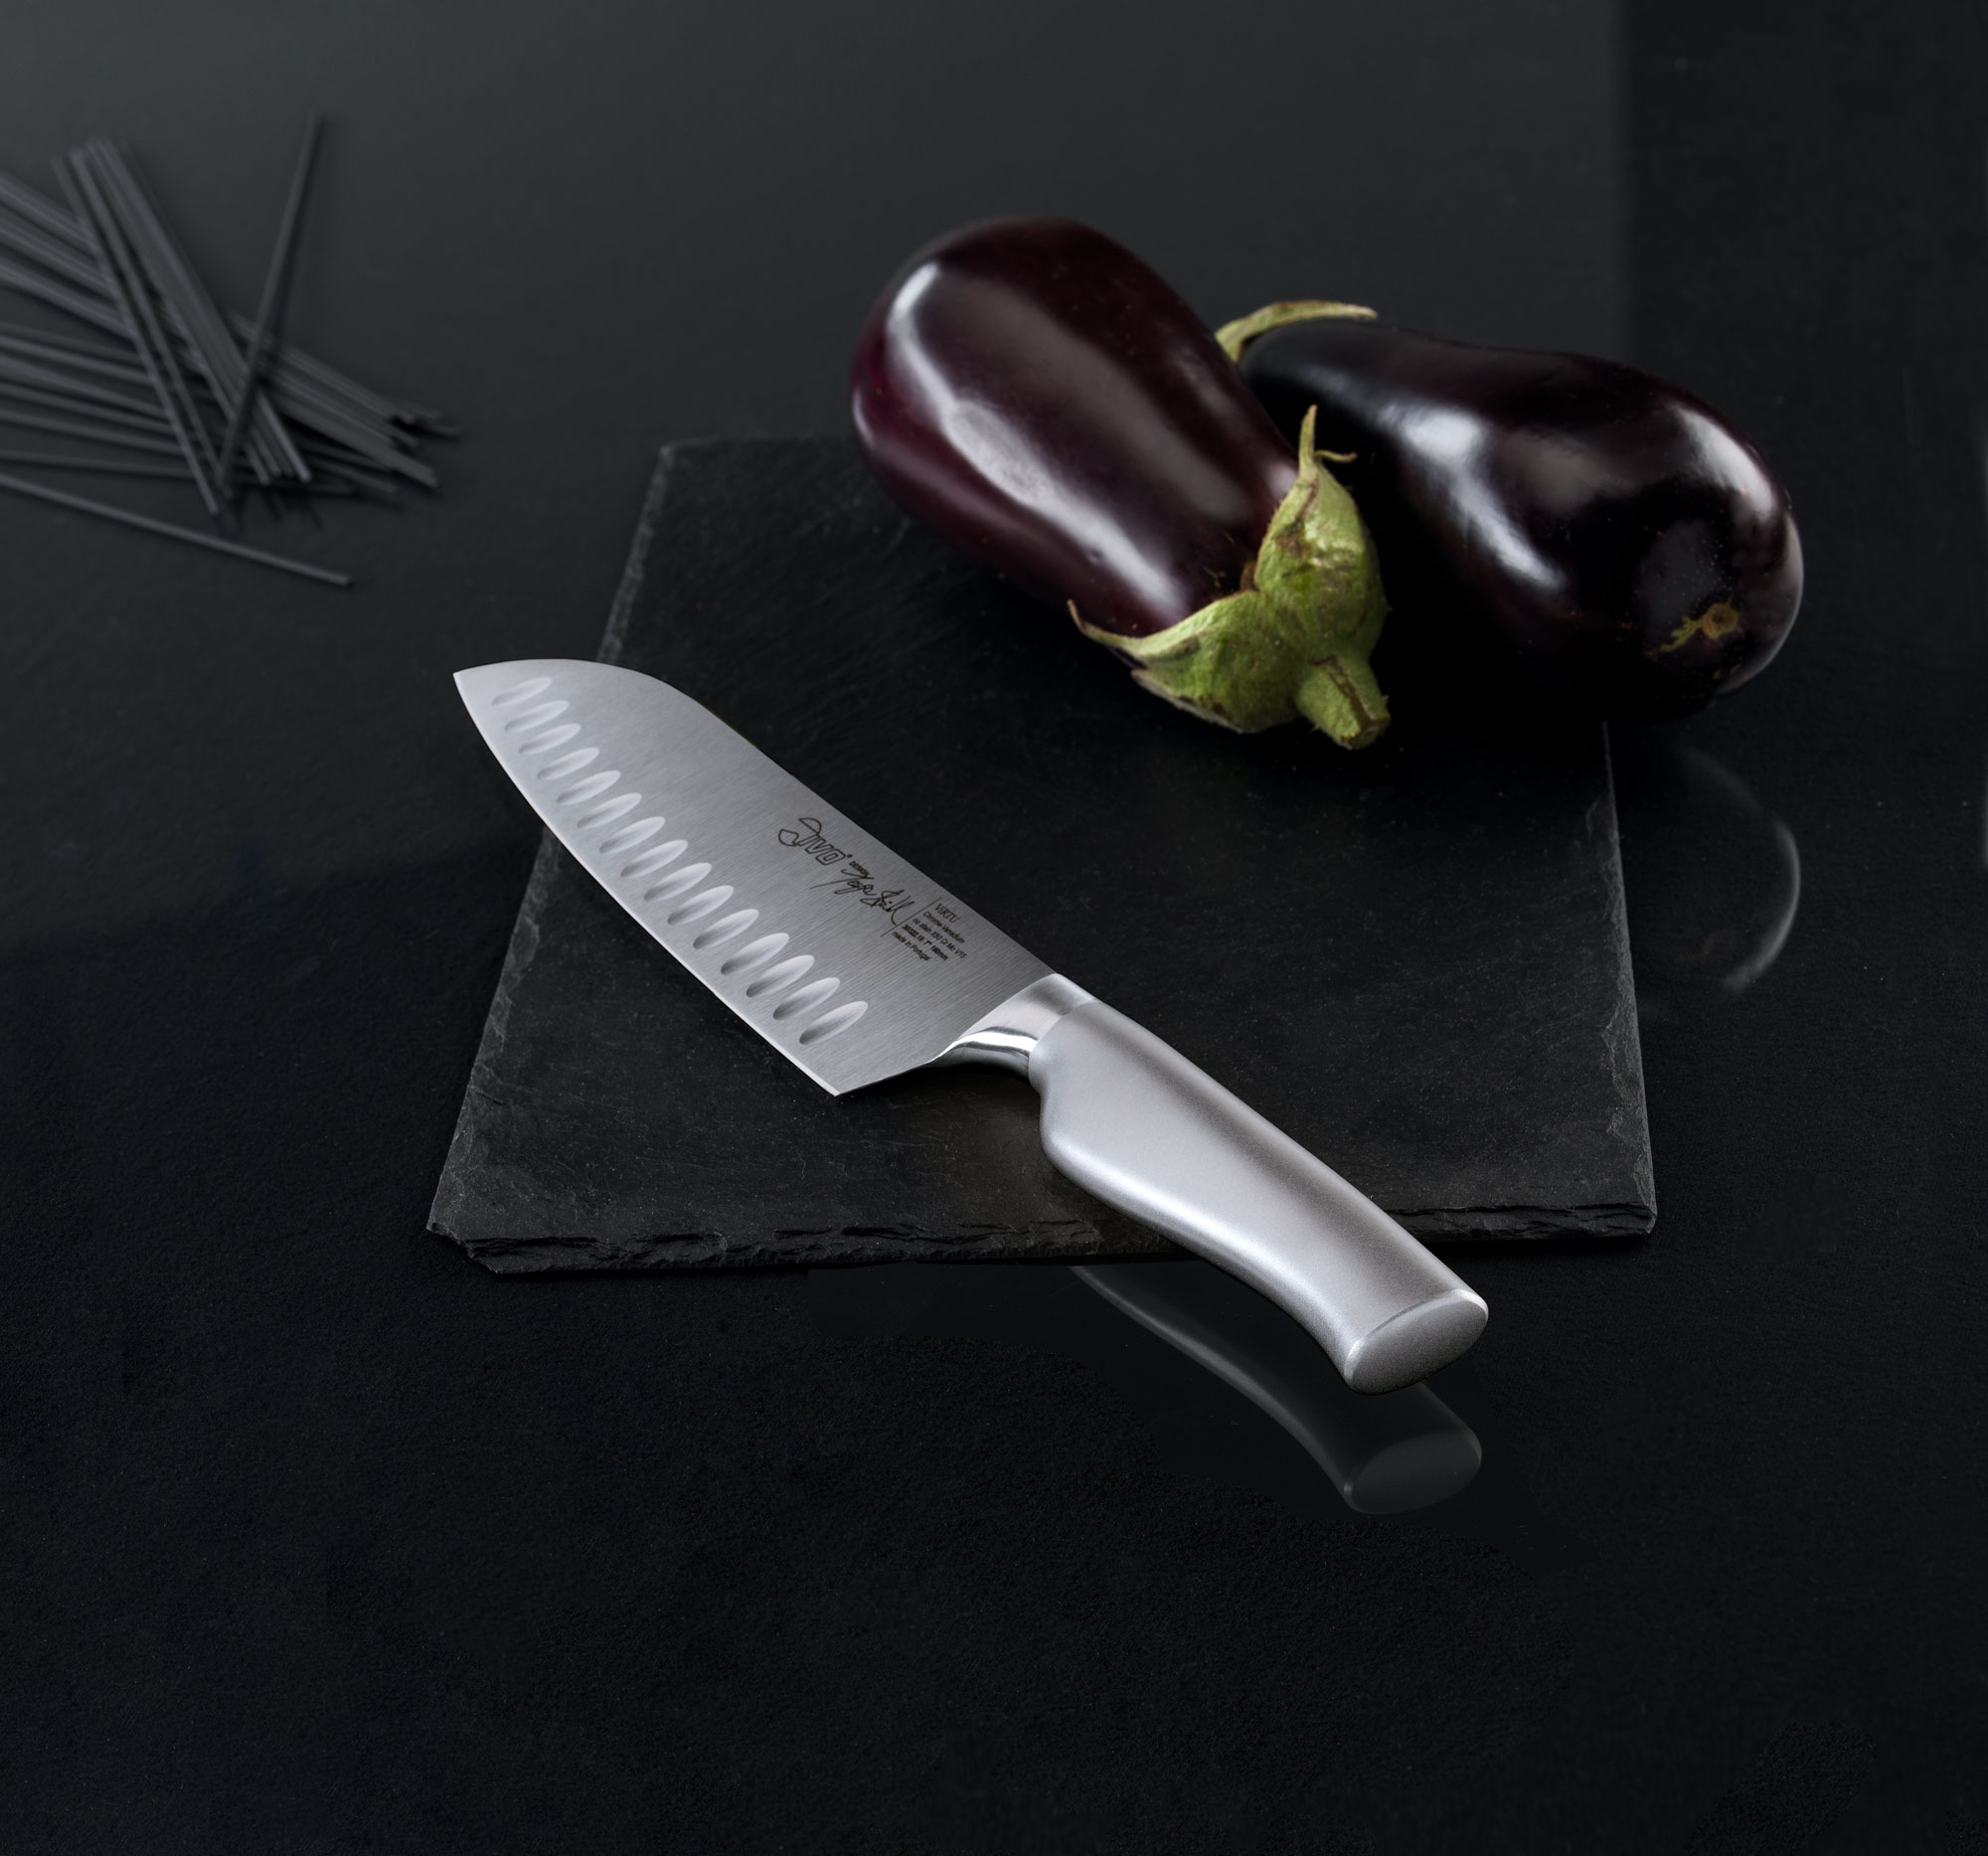 Nože IVO Cutelarias S.A. - kvalita vybrúsená tromi generáciami